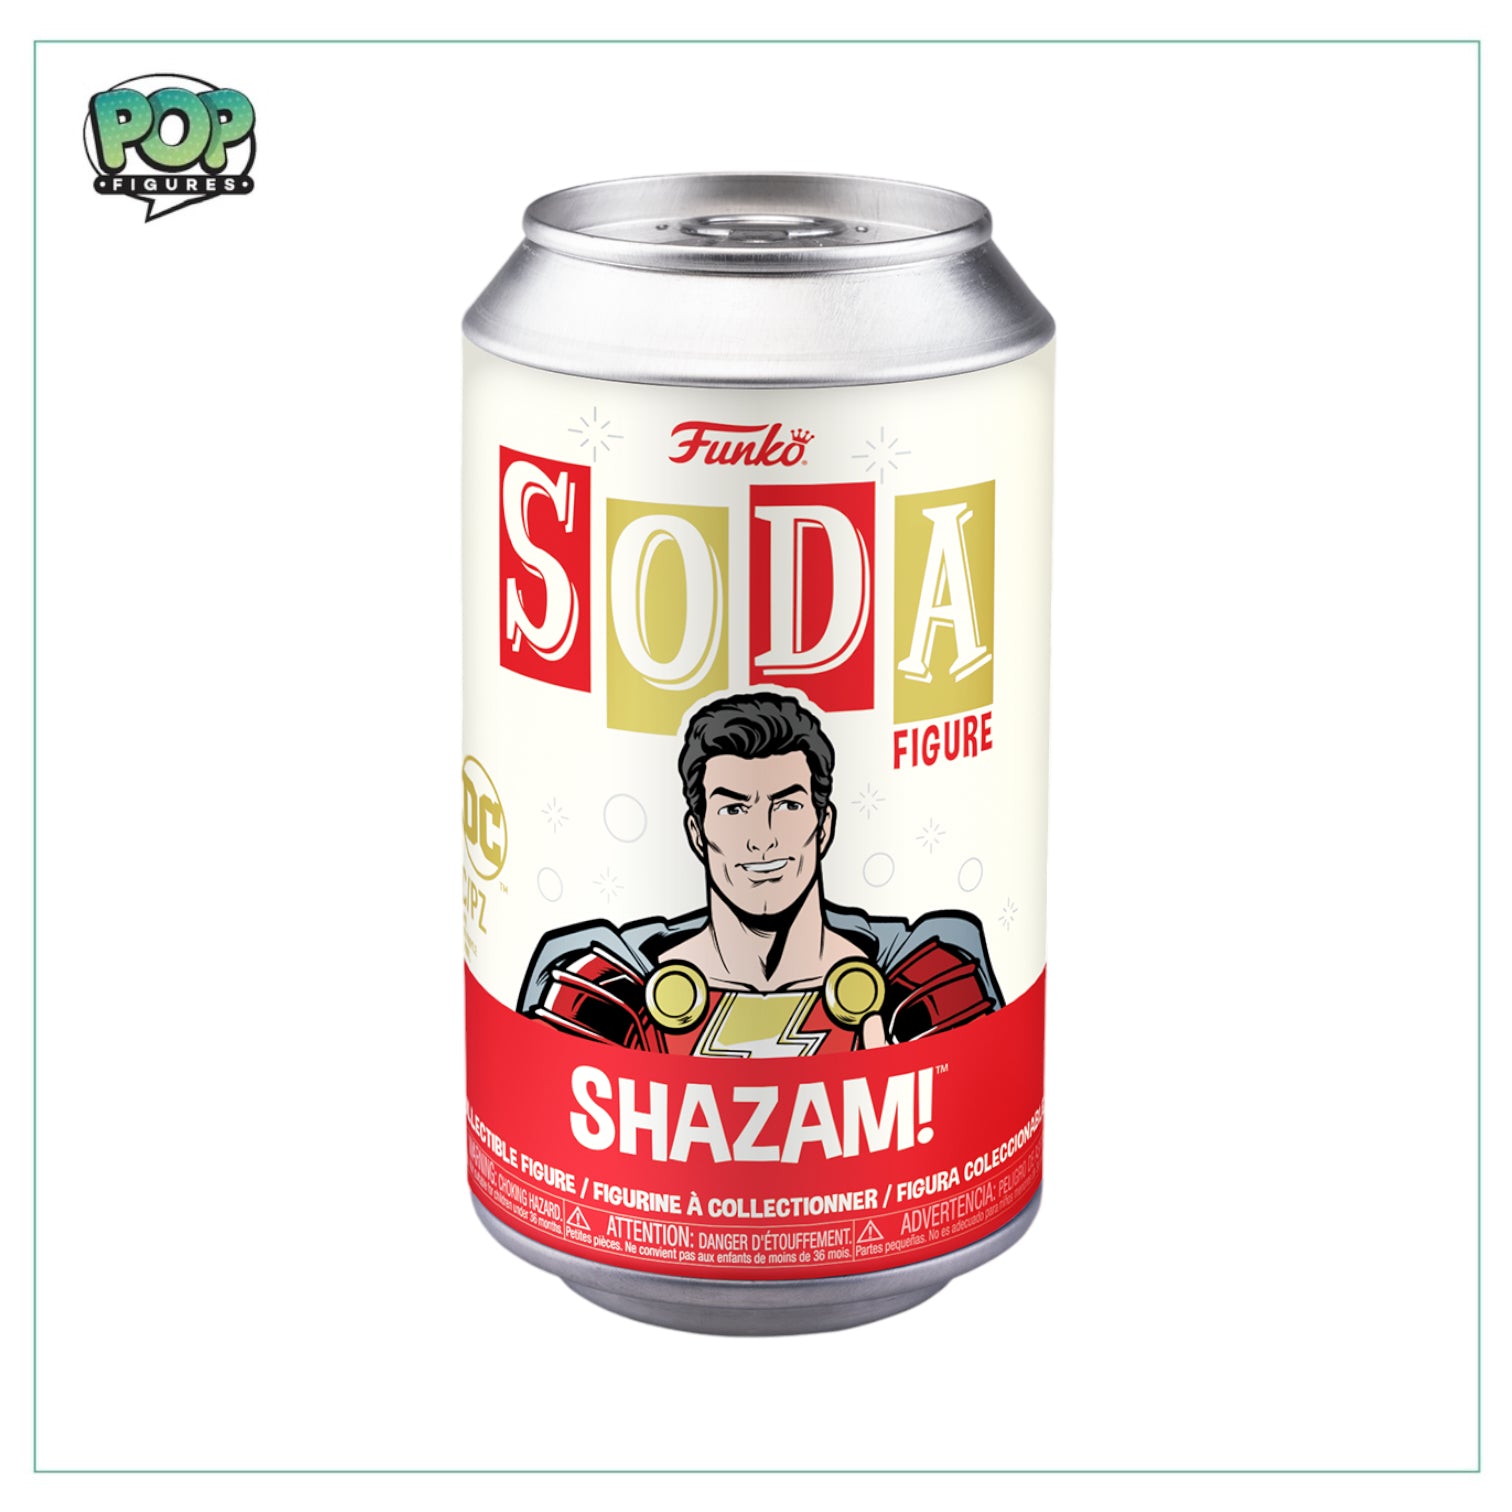 Shazam! Funko Soda Vinyl Figure! - Shazam! Fury of the Gods - Chance of Chase